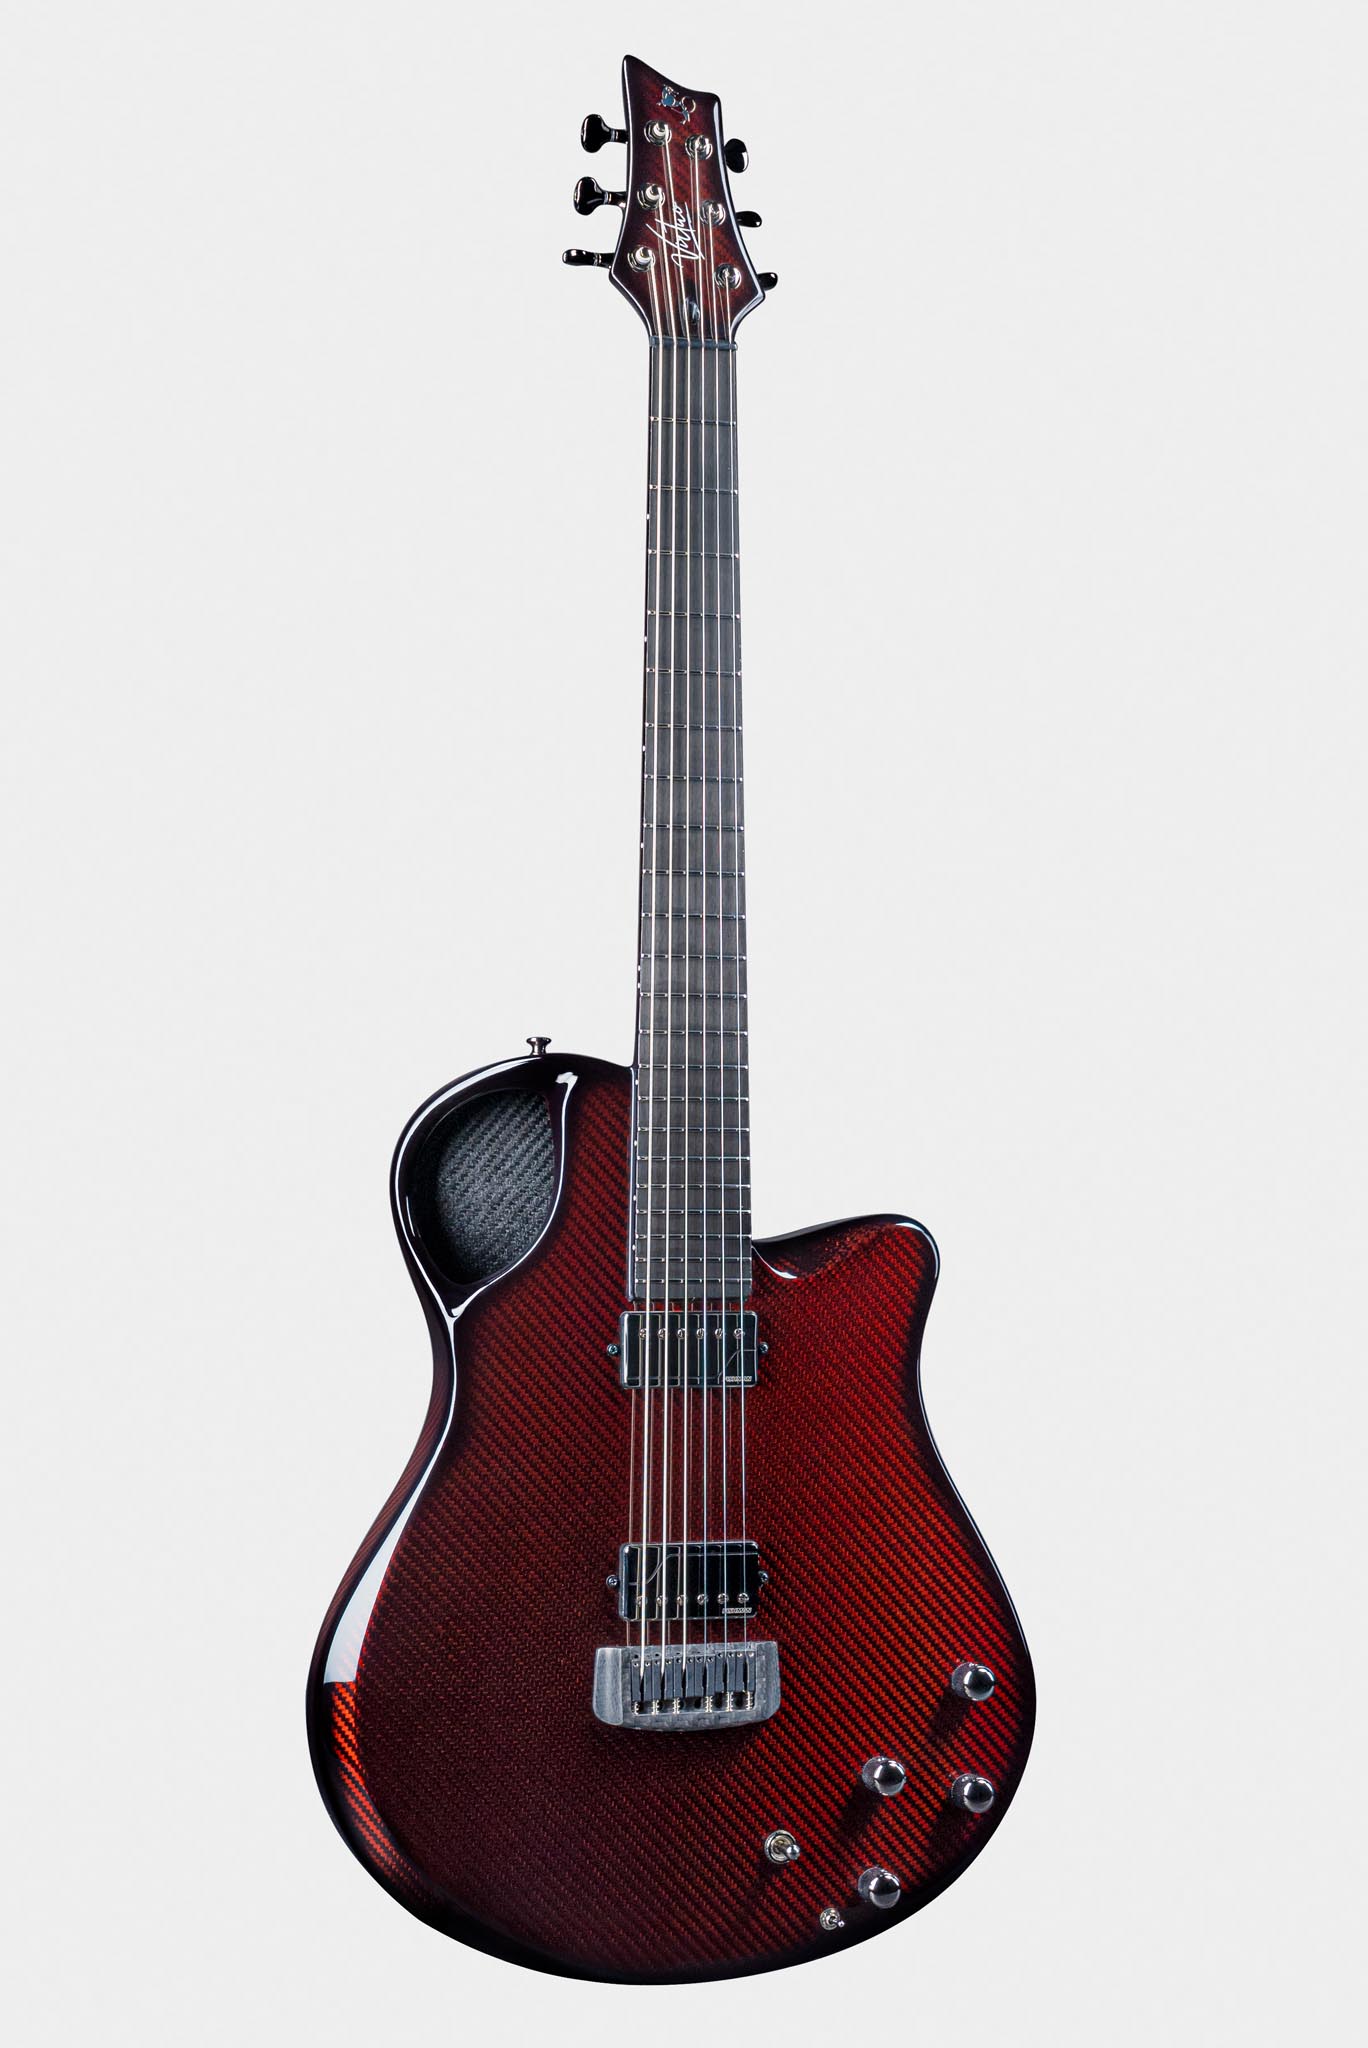 Emerald Virtuo Carbon Fiber Guitar in Red